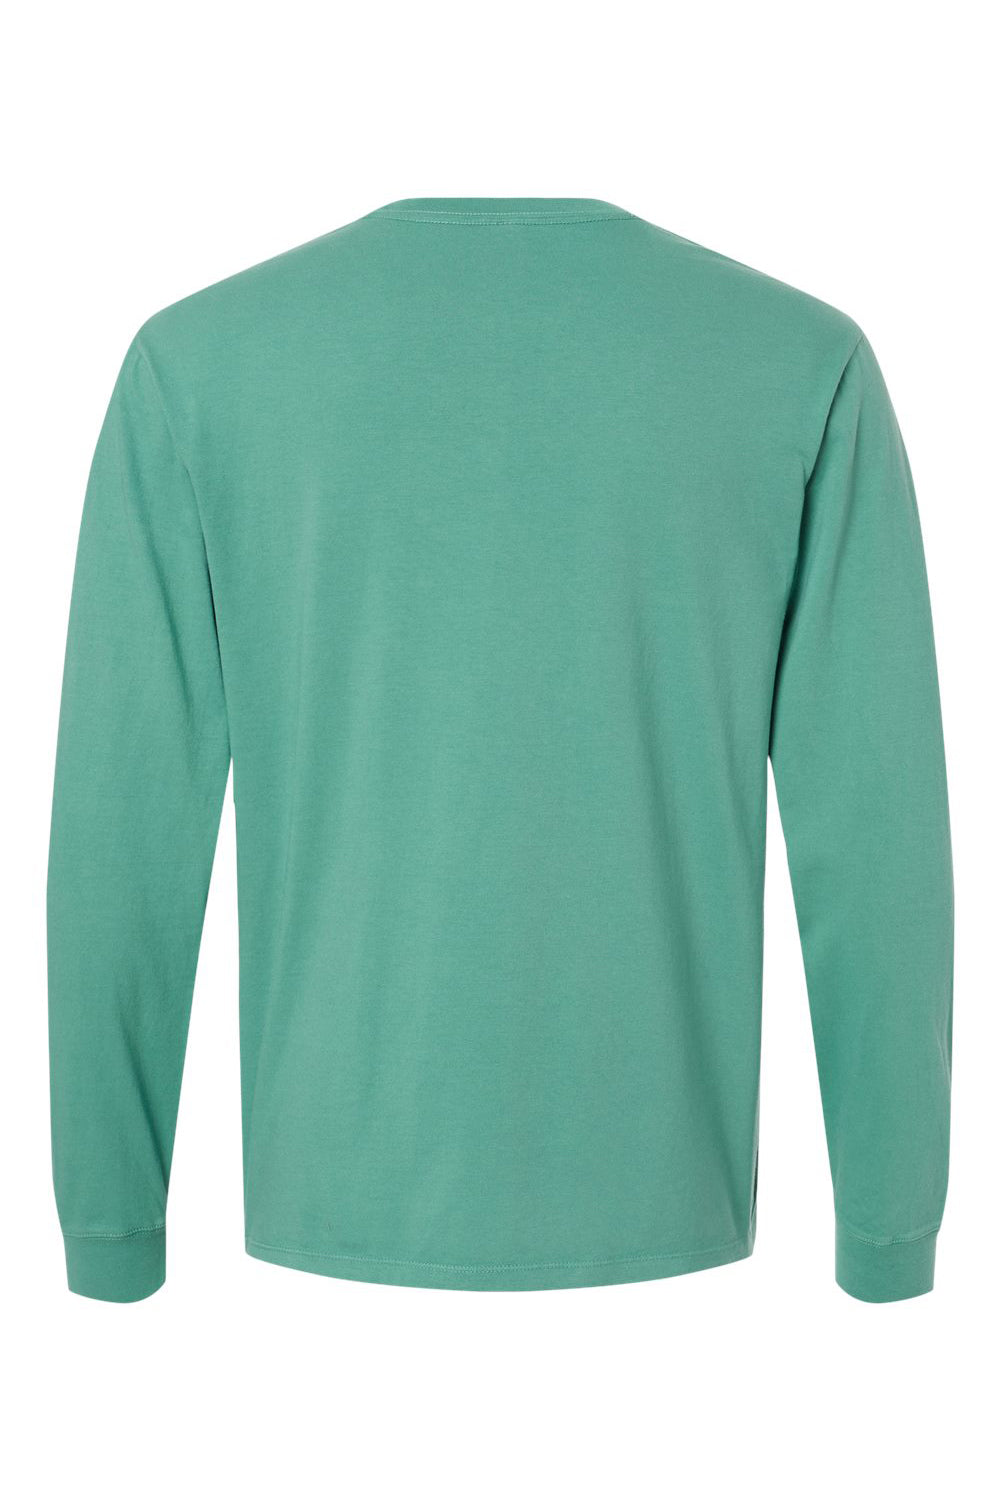 SoftShirts 420 Mens Organic Long Sleeve Crewneck T-Shirt Pine Green Flat Back